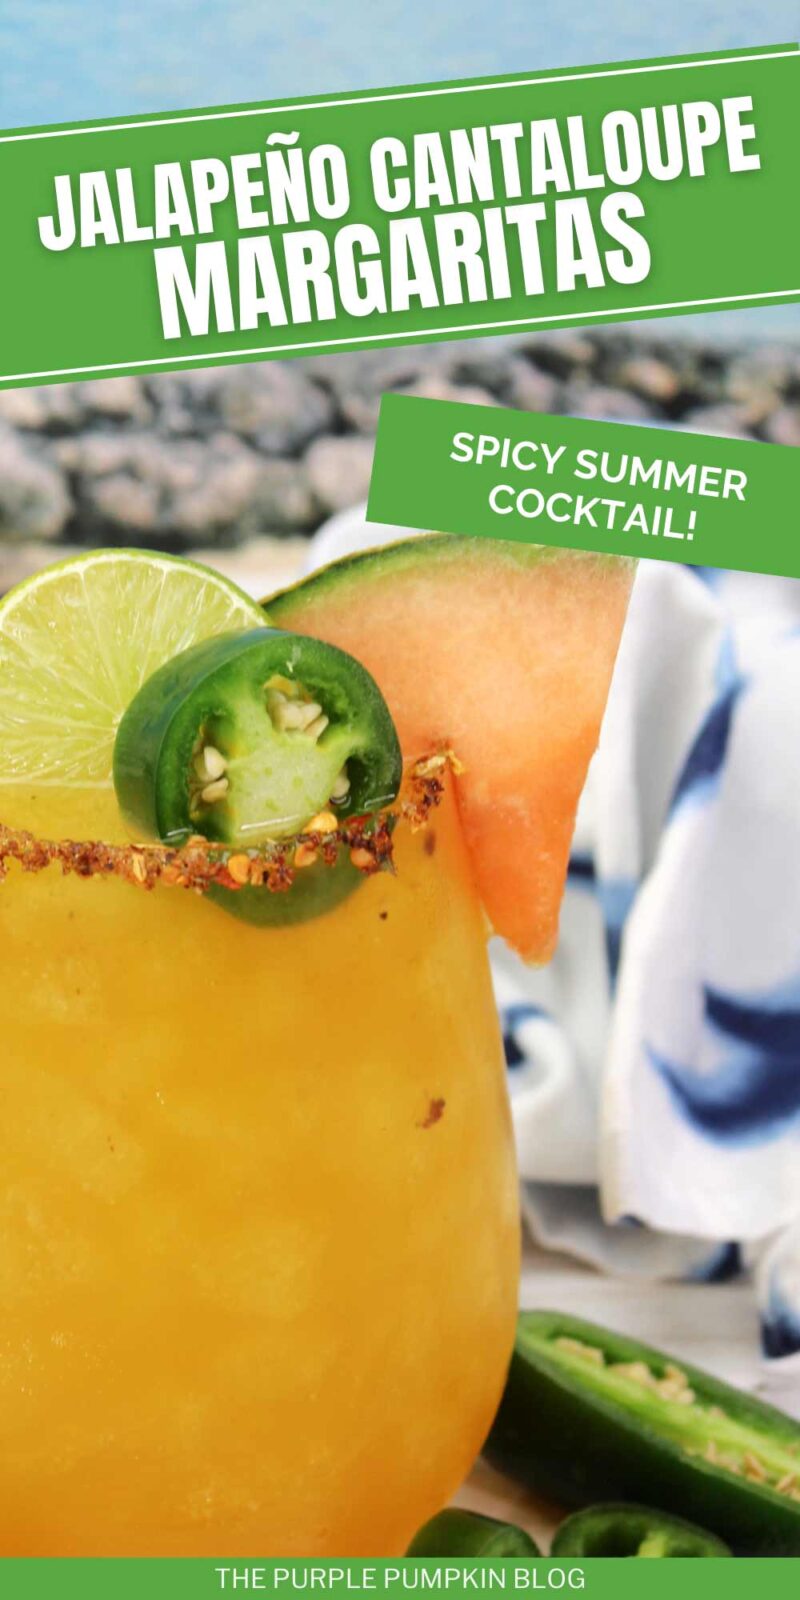 Jalapeño Cantaloupe Margaritas - Spicy Summer Cocktail!